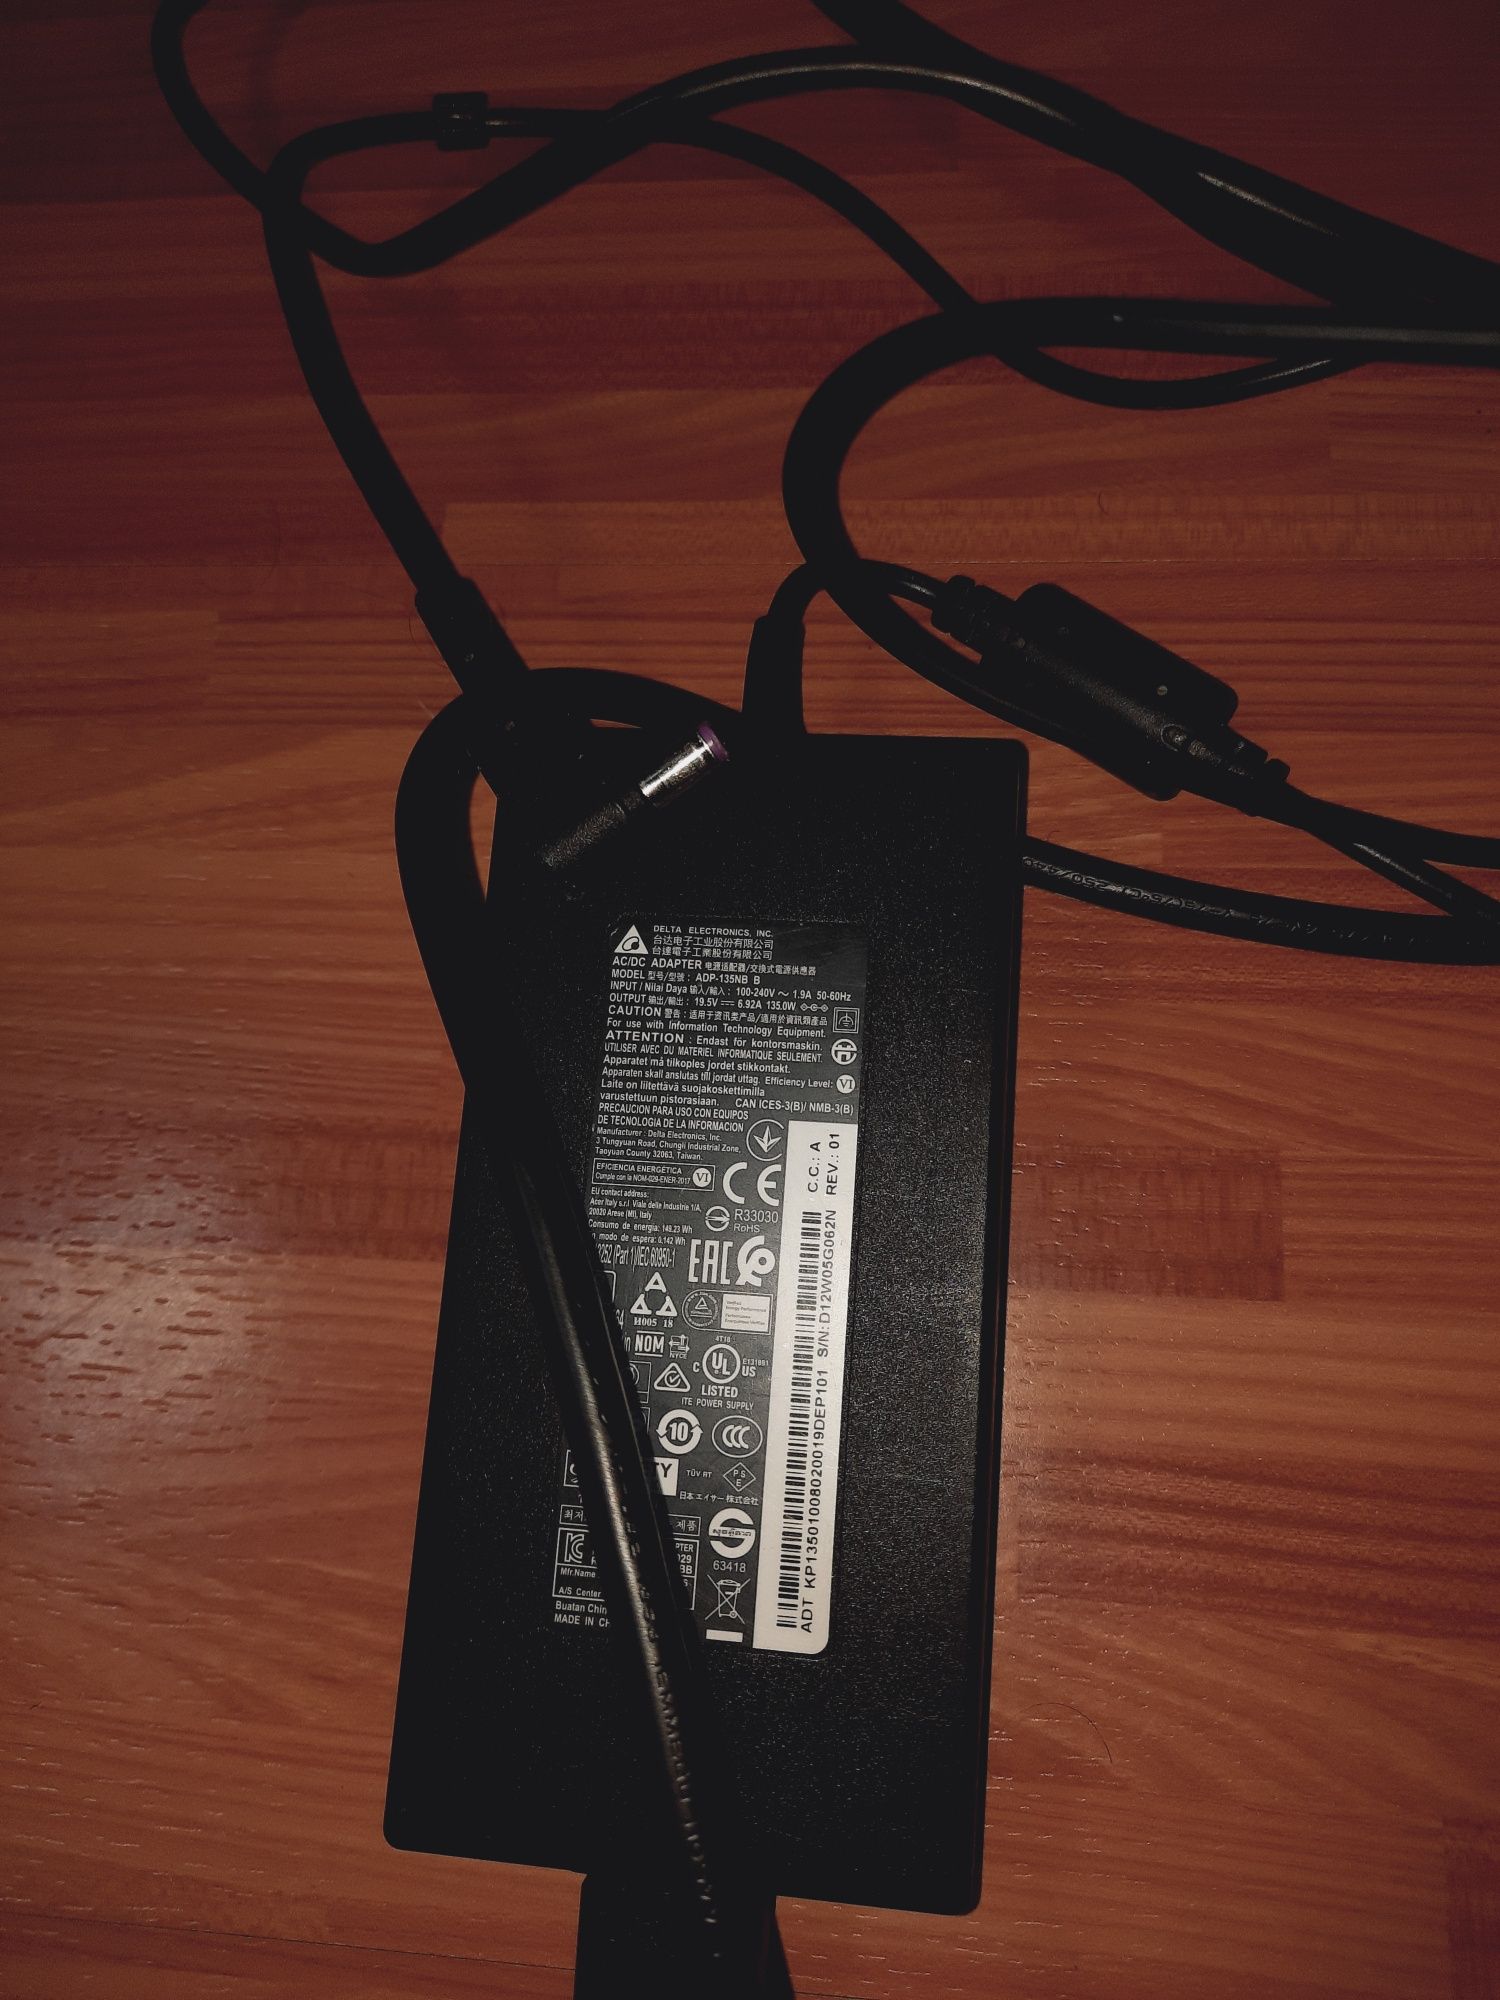 Acer Nitro 5 I5-10300H, NVIDIA GeForce GTX 1650 4GB, 8GB RAM, SSD